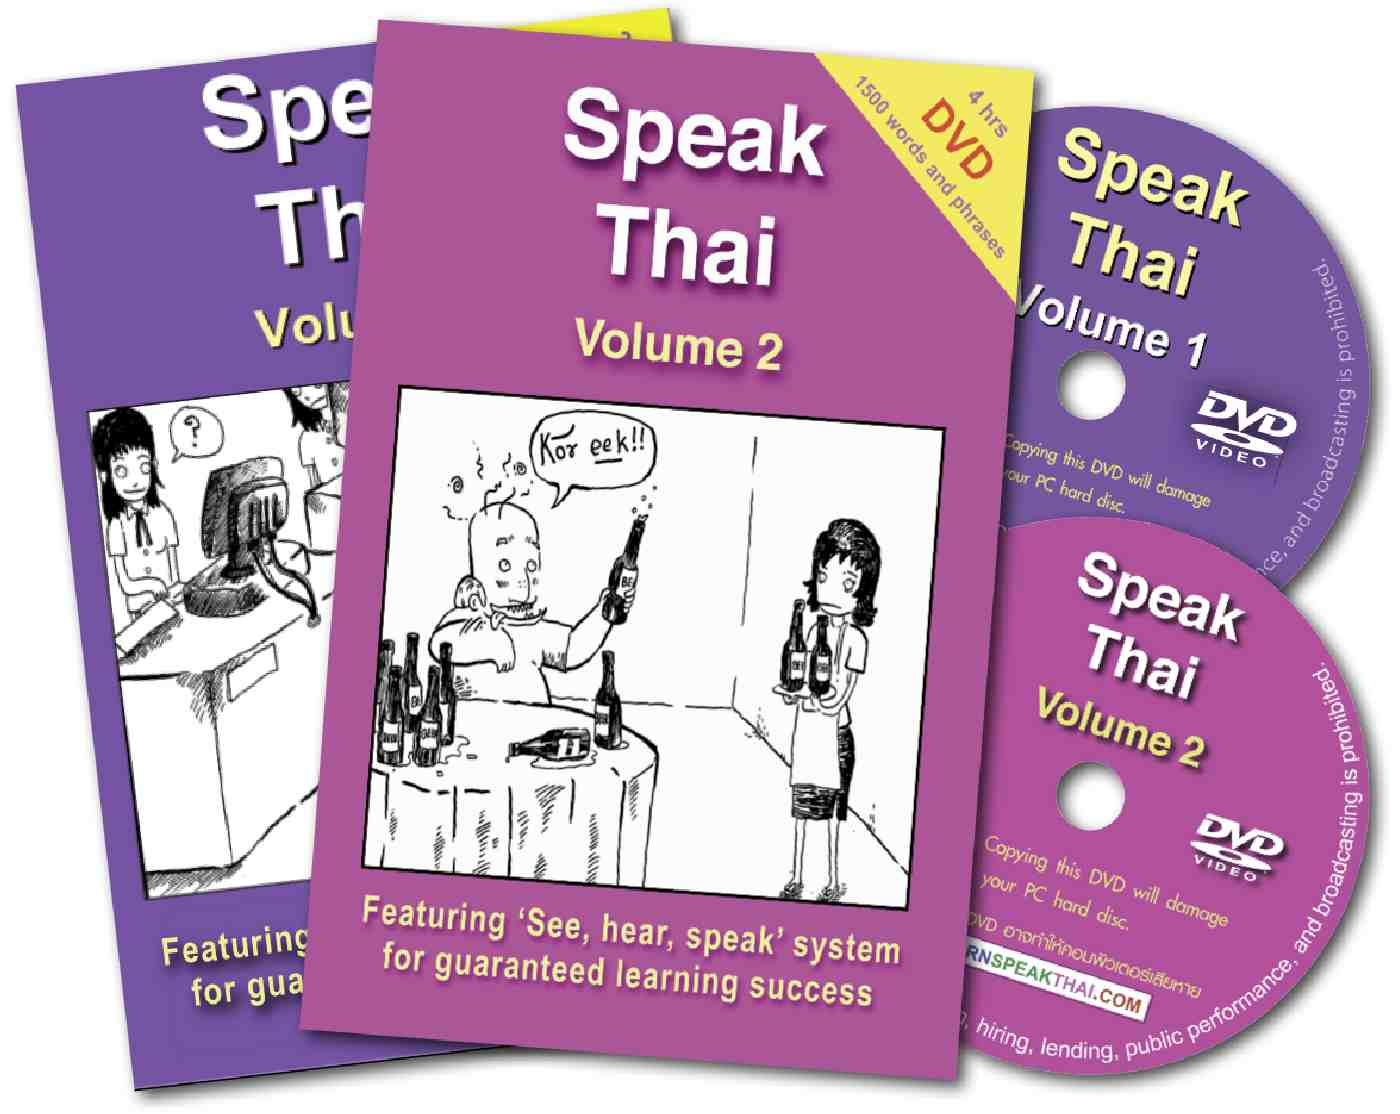 The Complete Speak Thai Volume 1 and 2